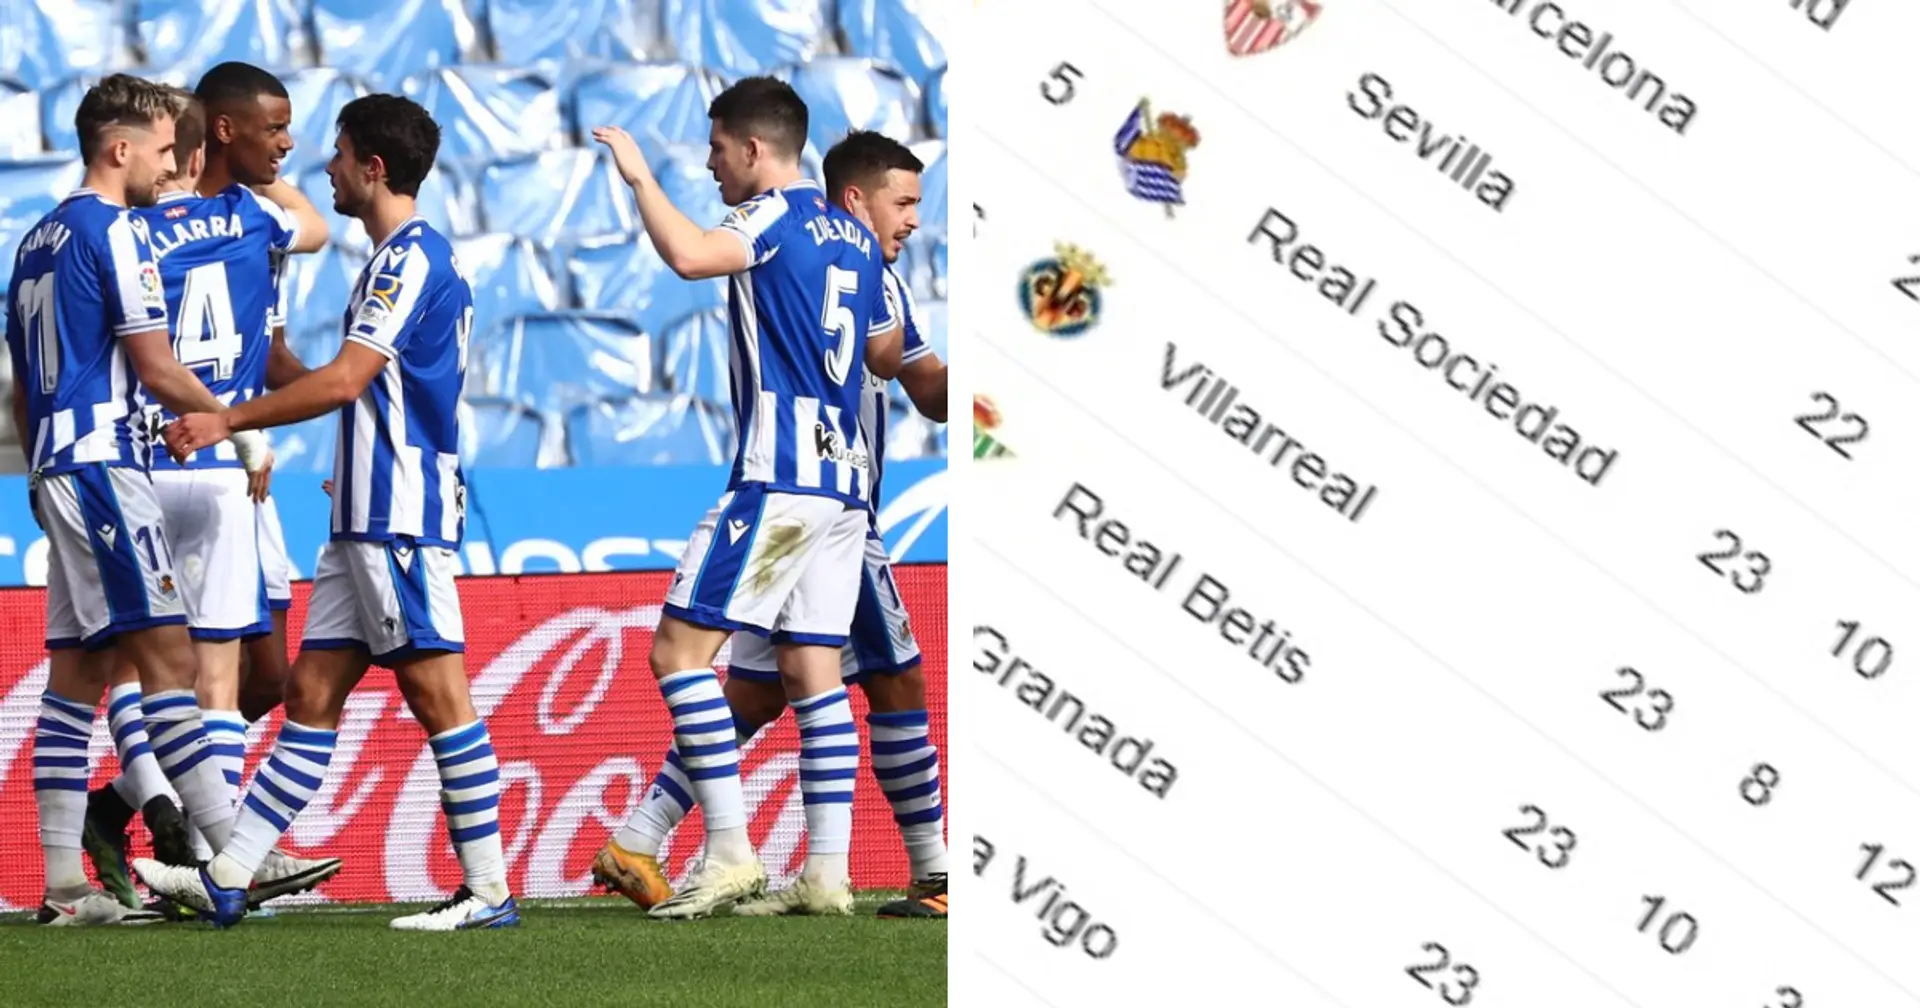 Europa League watch: Real Sociedad hit good form ahead of Man United clash